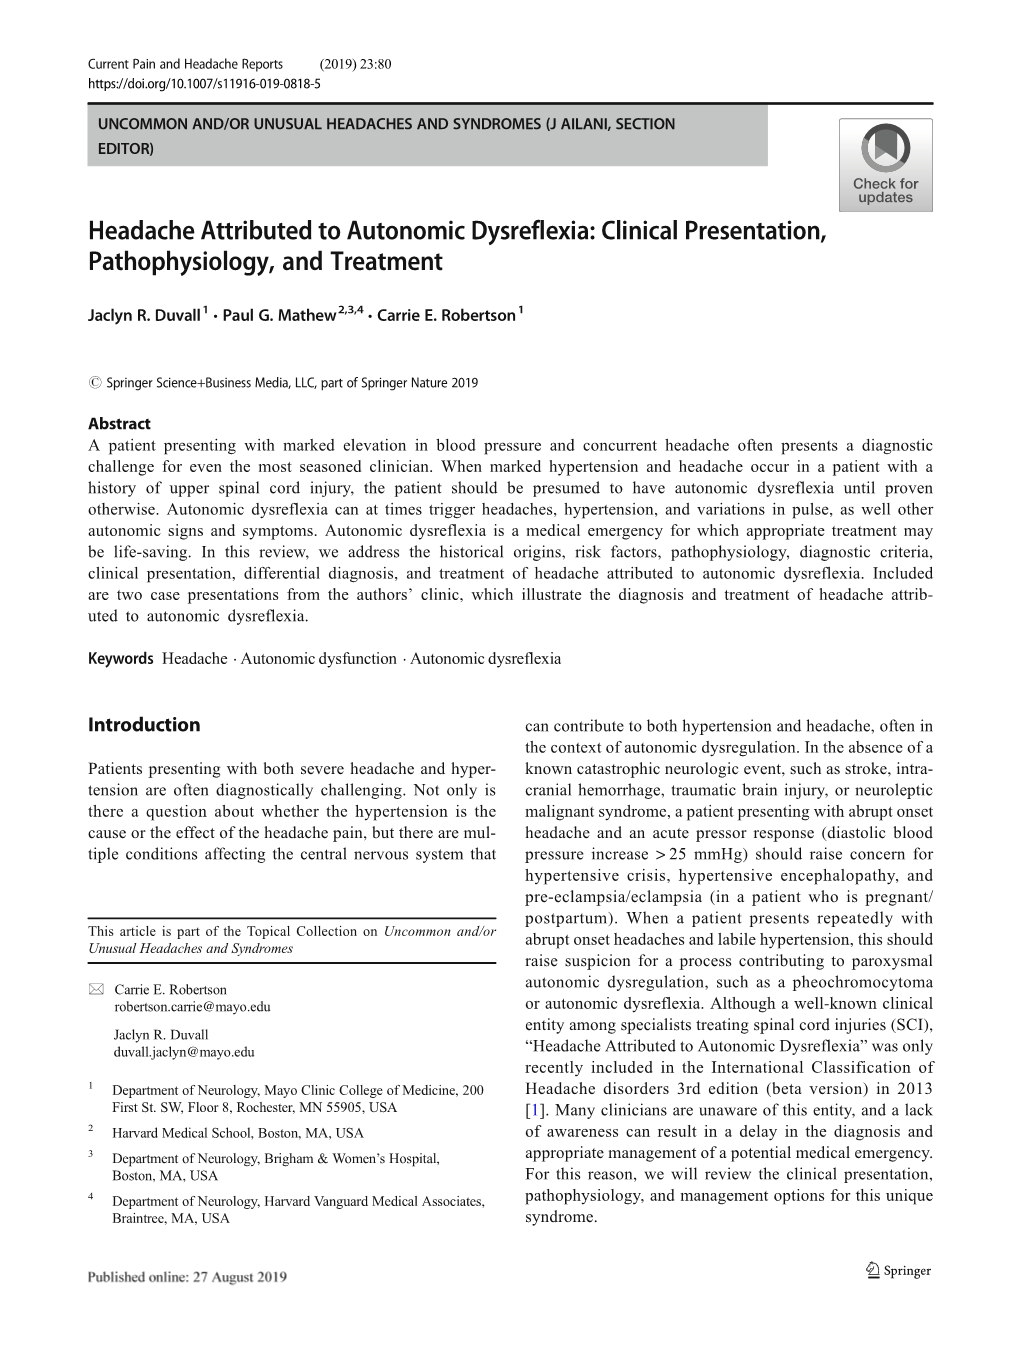 Headache Attributed to Autonomic Dysreflexia: Clinical Presentation, Pathophysiology, and Treatment